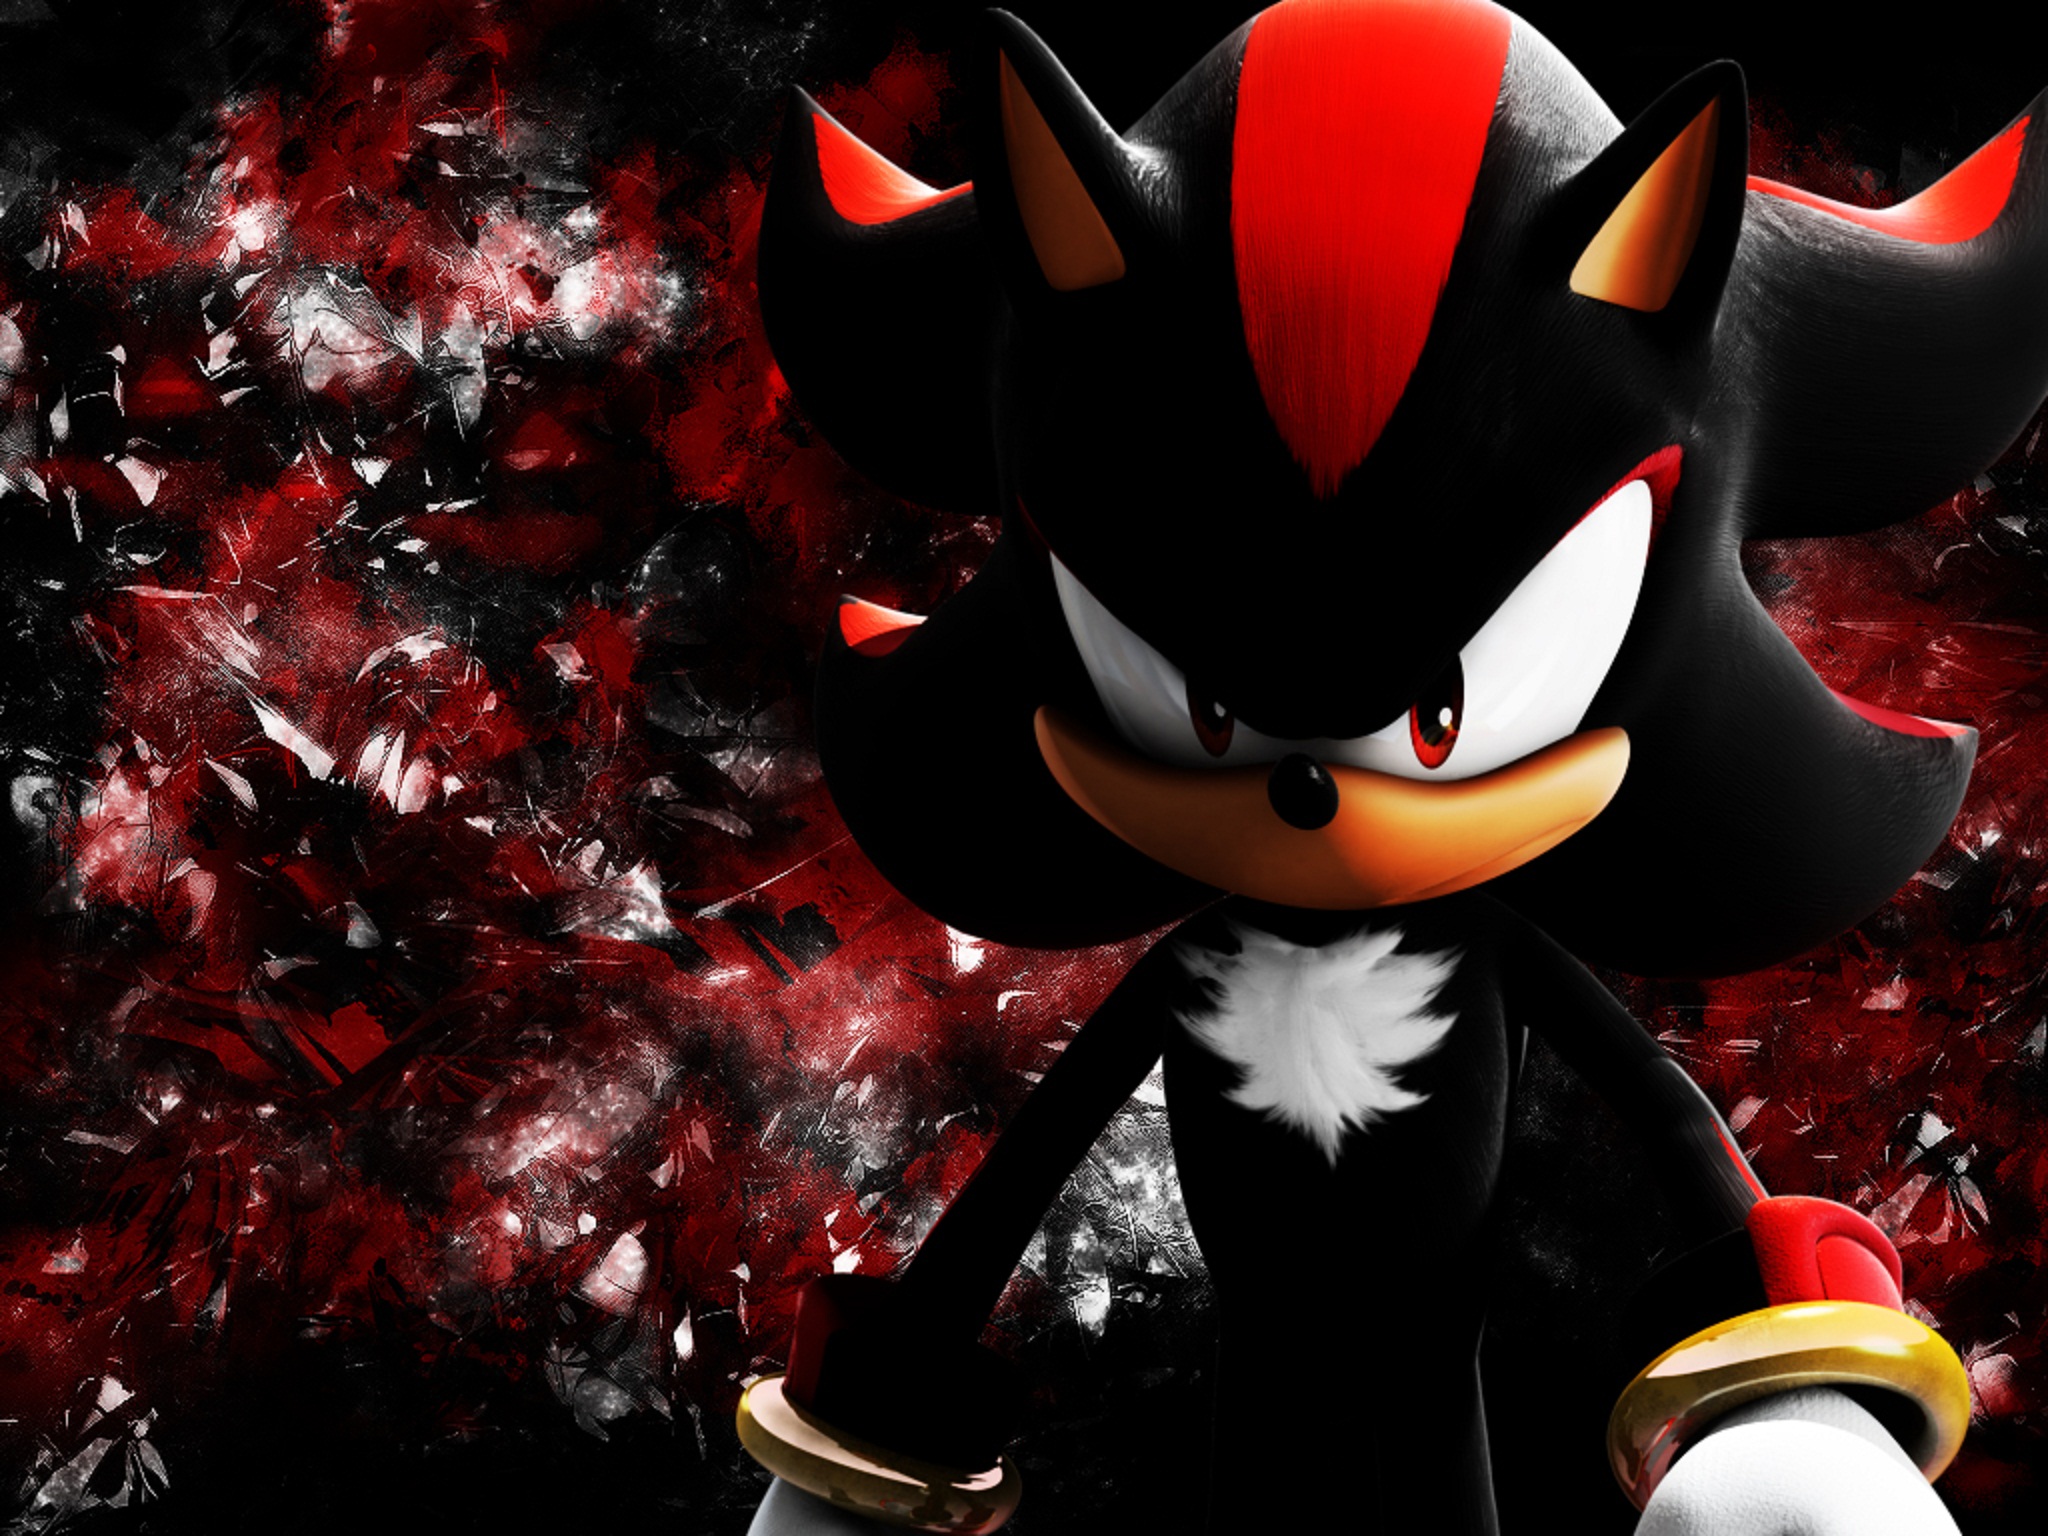 SonAmy - Sonic the Hedgehog - Zerochan Anime Image Board